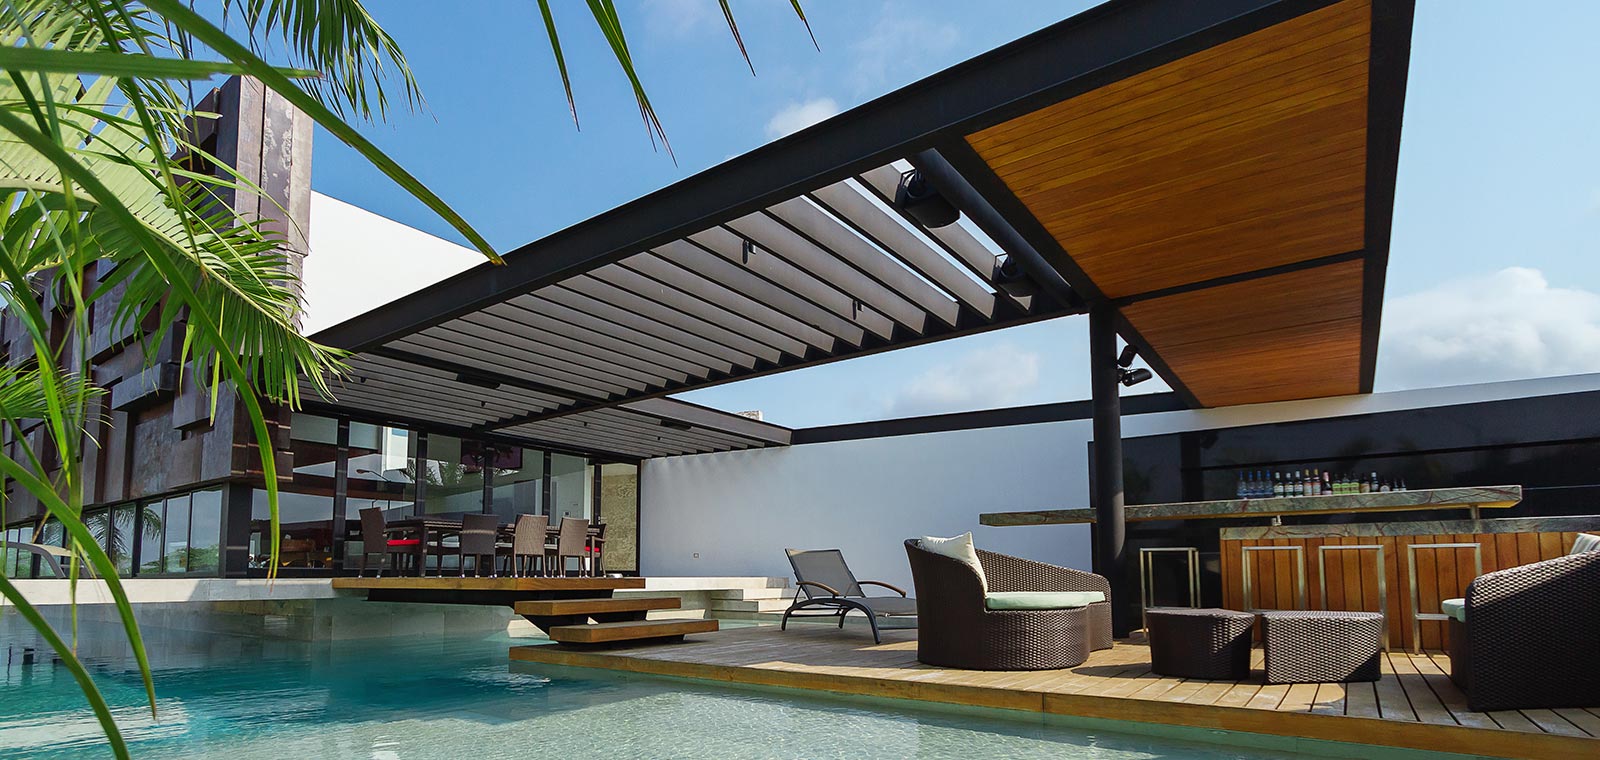 Modern lakeside house with stunning pool for bachelor lifestyle